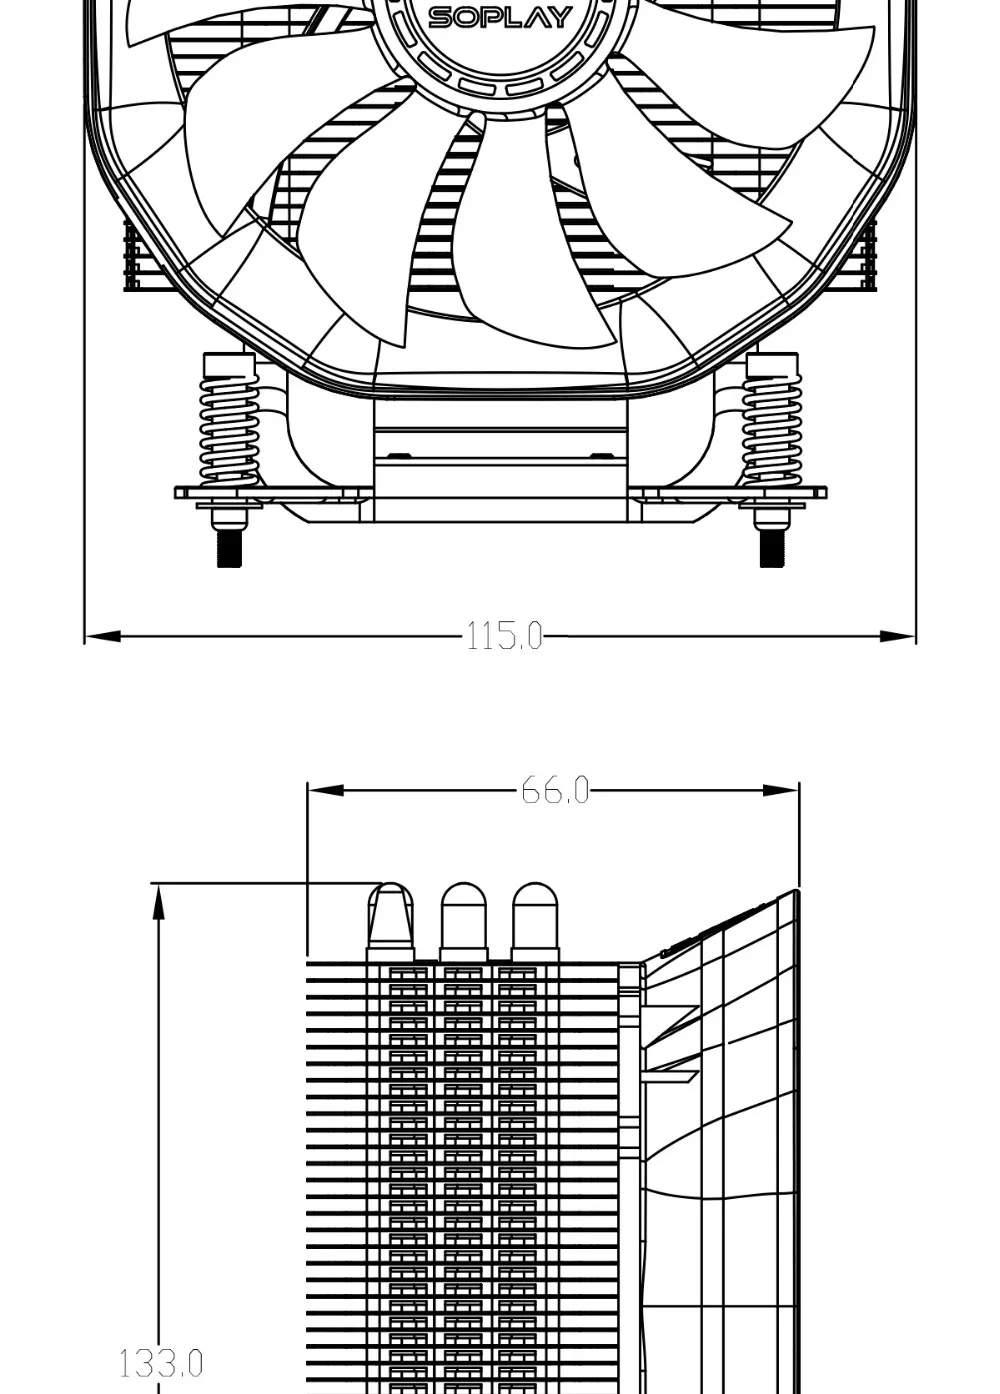 SOPLAY кулер для процессора вентилятор 3 тепловые трубки 4pin 115 мм вентилятор Алюминиевый радиатор для LGA 1150/1155/1156/